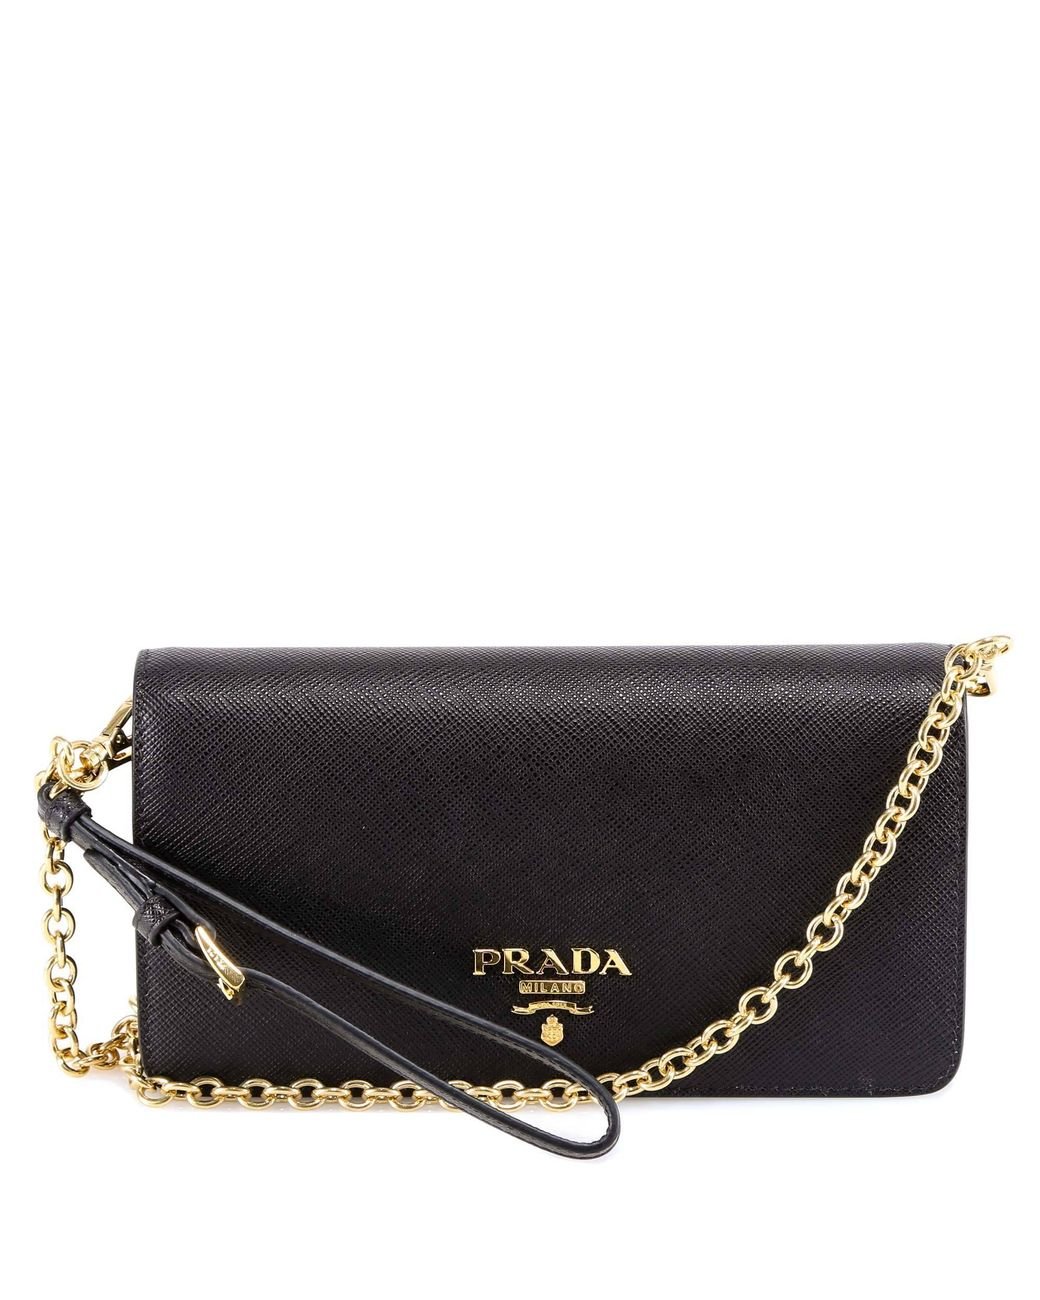 Prada Saffiano Chain Clutch Bag in Black - Lyst